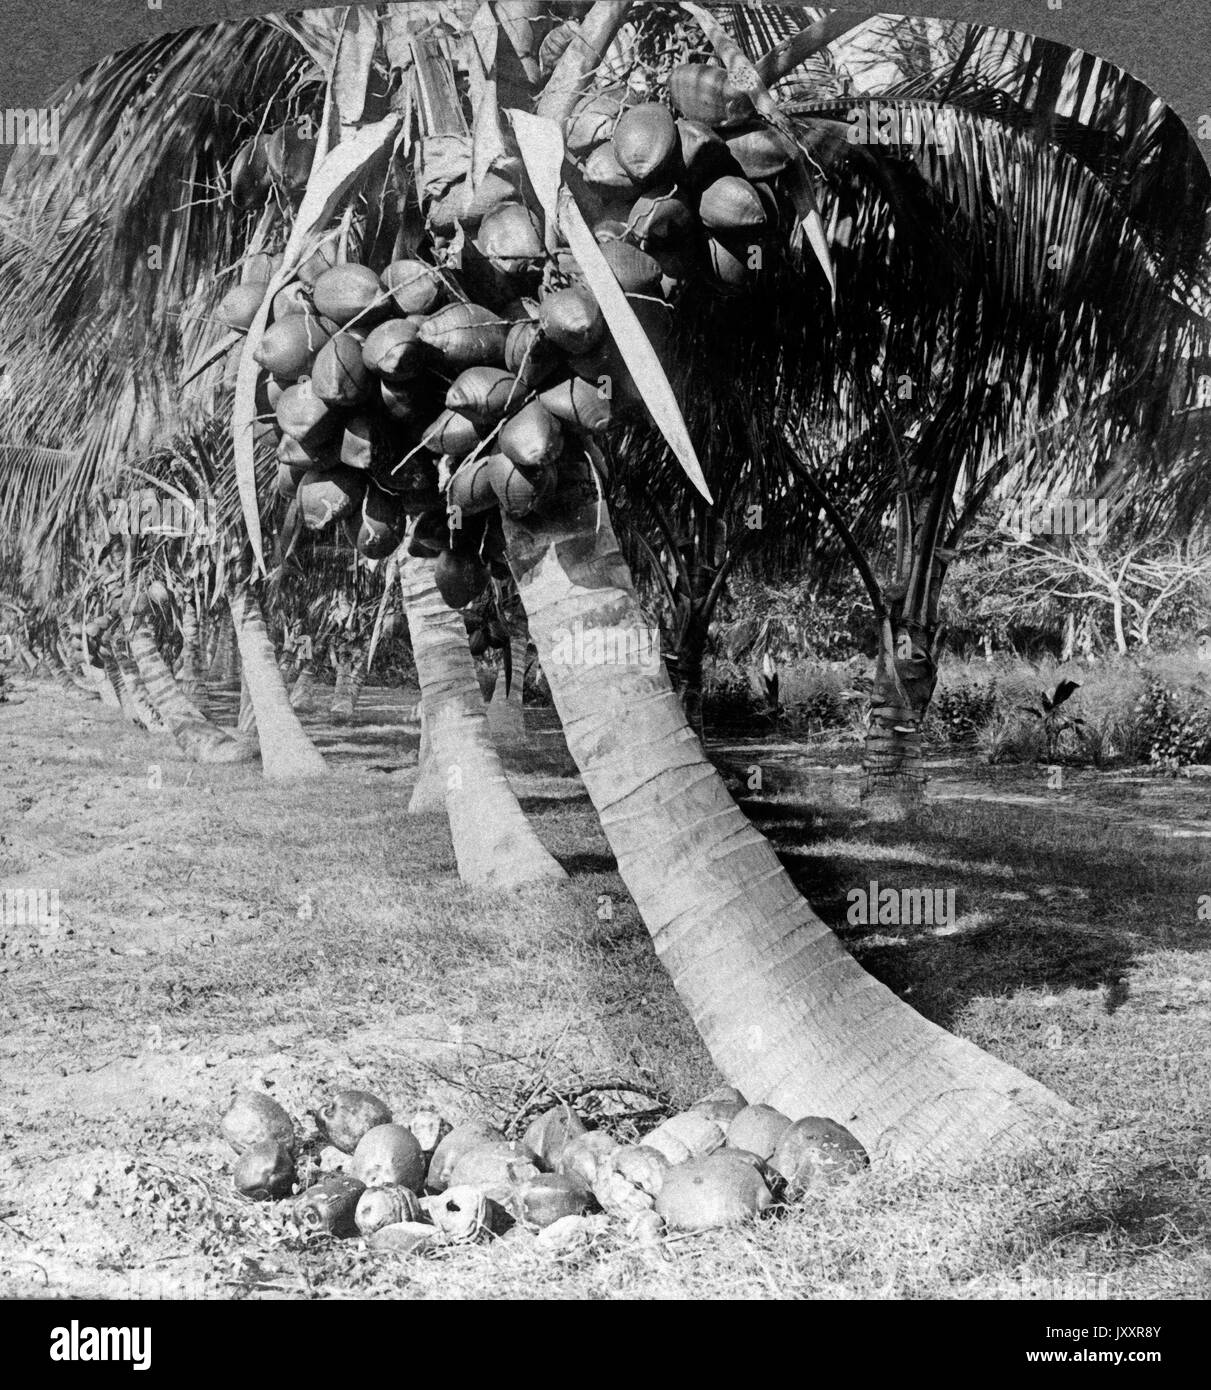 Kakaopalmen in den White Sands von Florida, USA, 1895. Cocoanut palmtrees in the White Sands of Florida, USA, 1895. Stock Photo